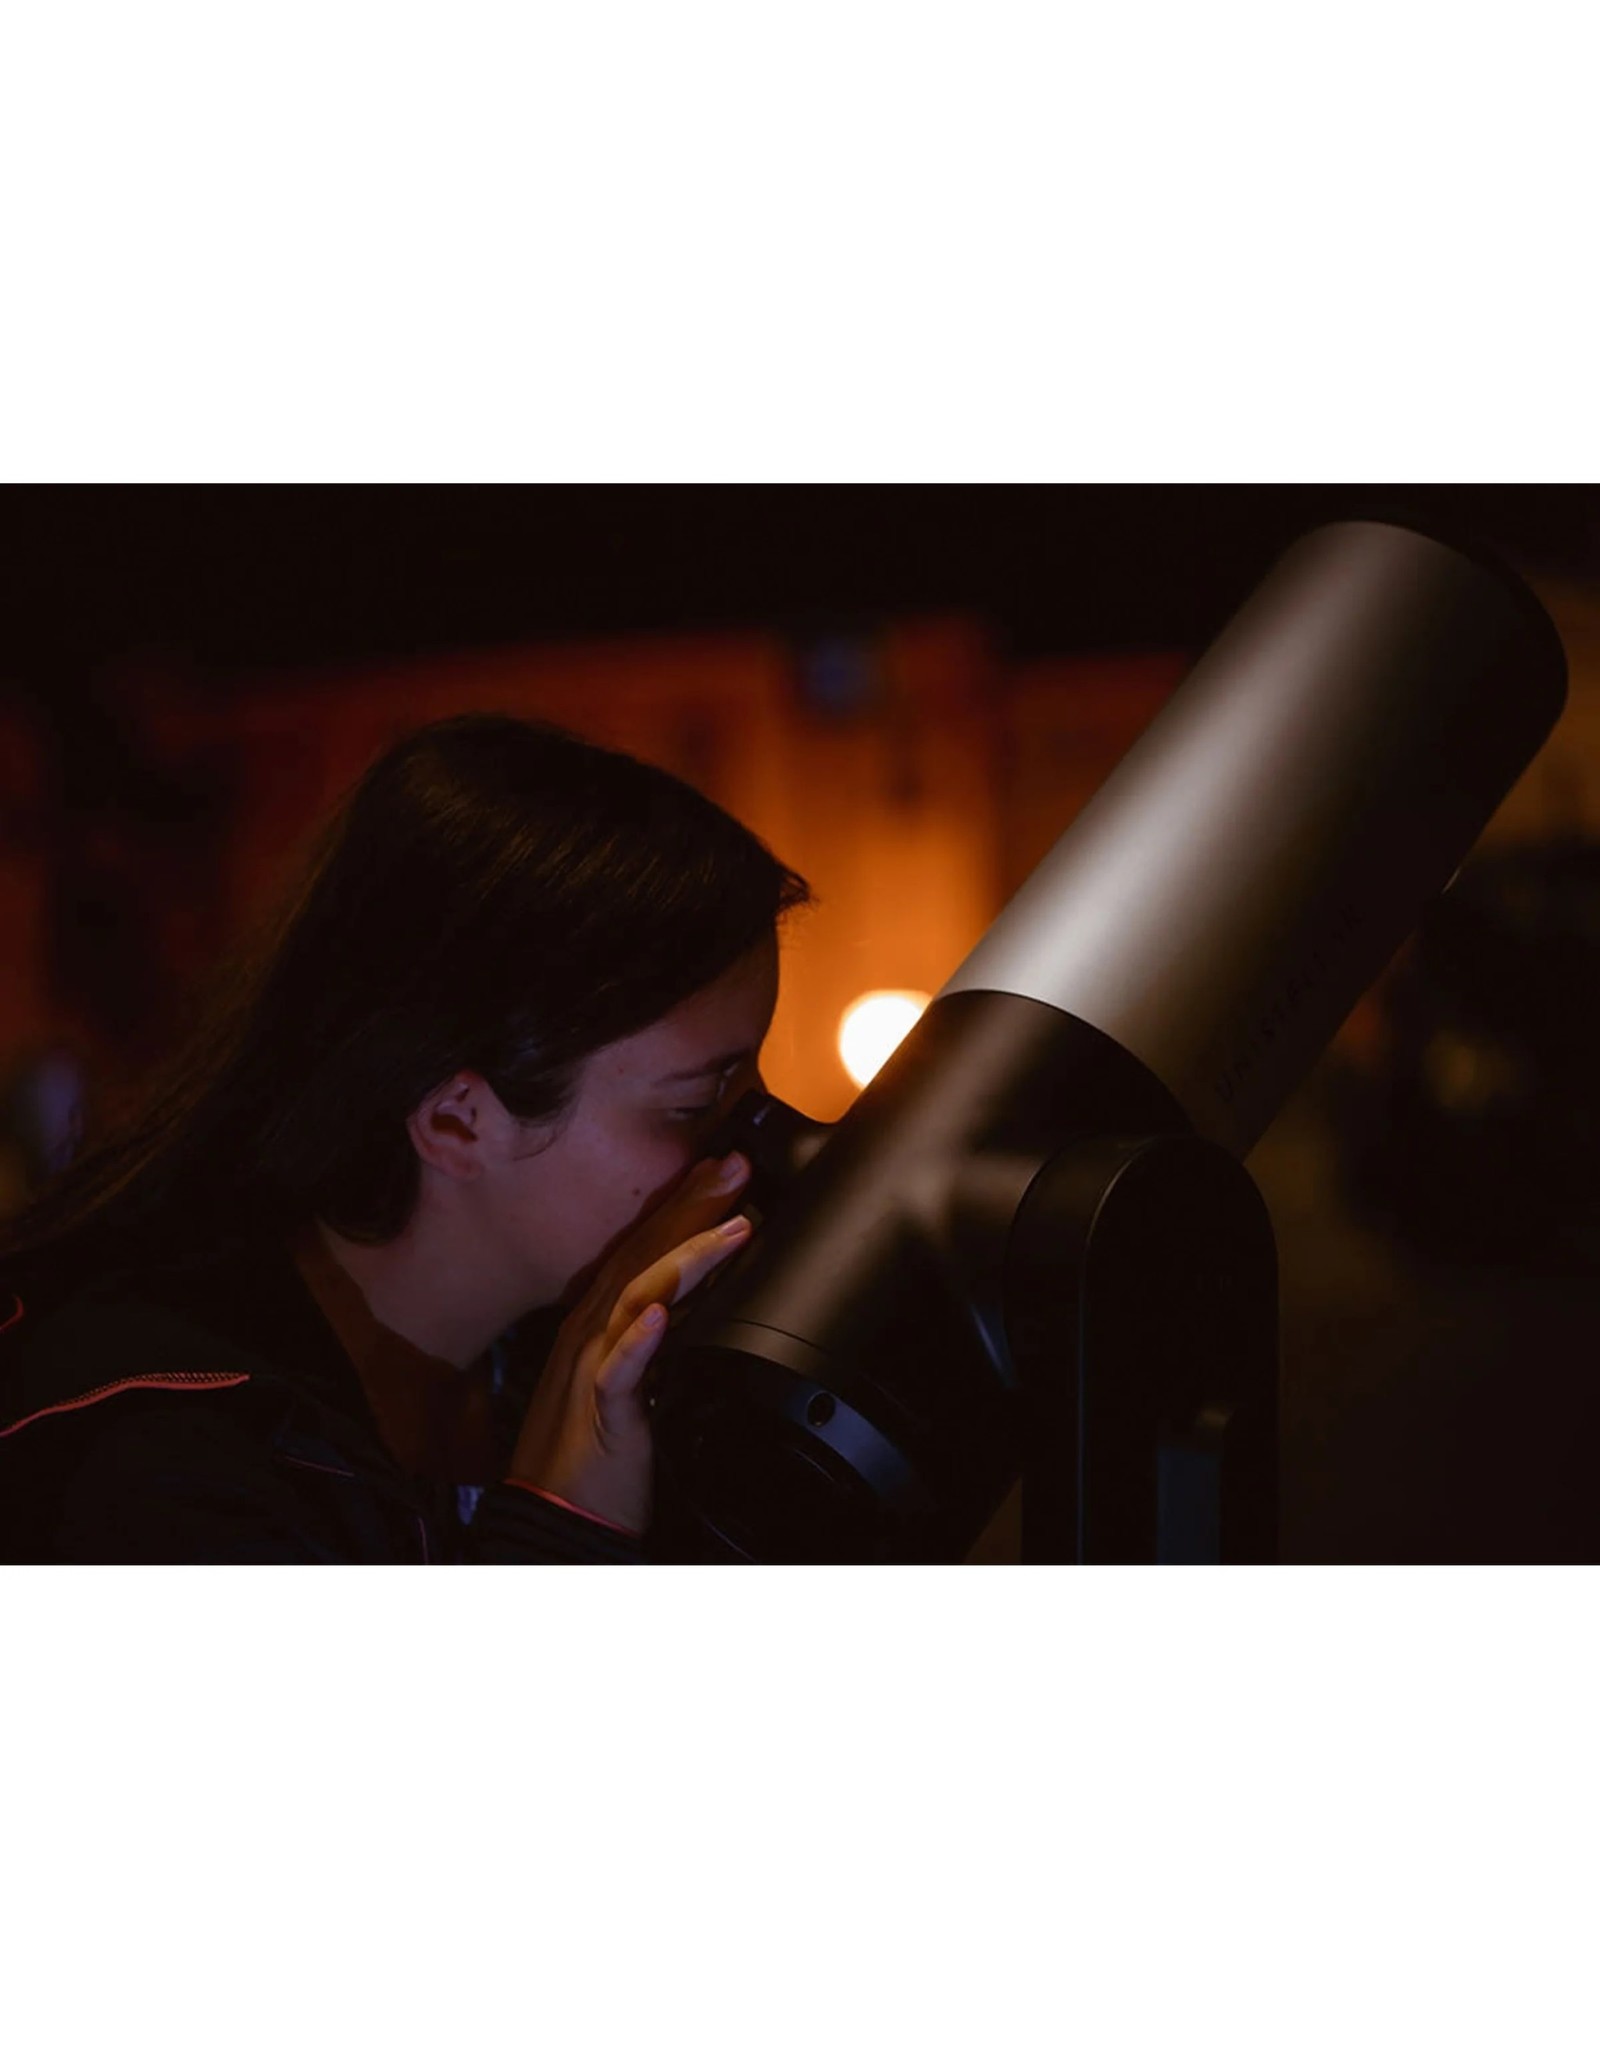 Unistellar Unistellar eVscope 2 Digital Telescope - Smart, Compact, and User-Friendly Telescope